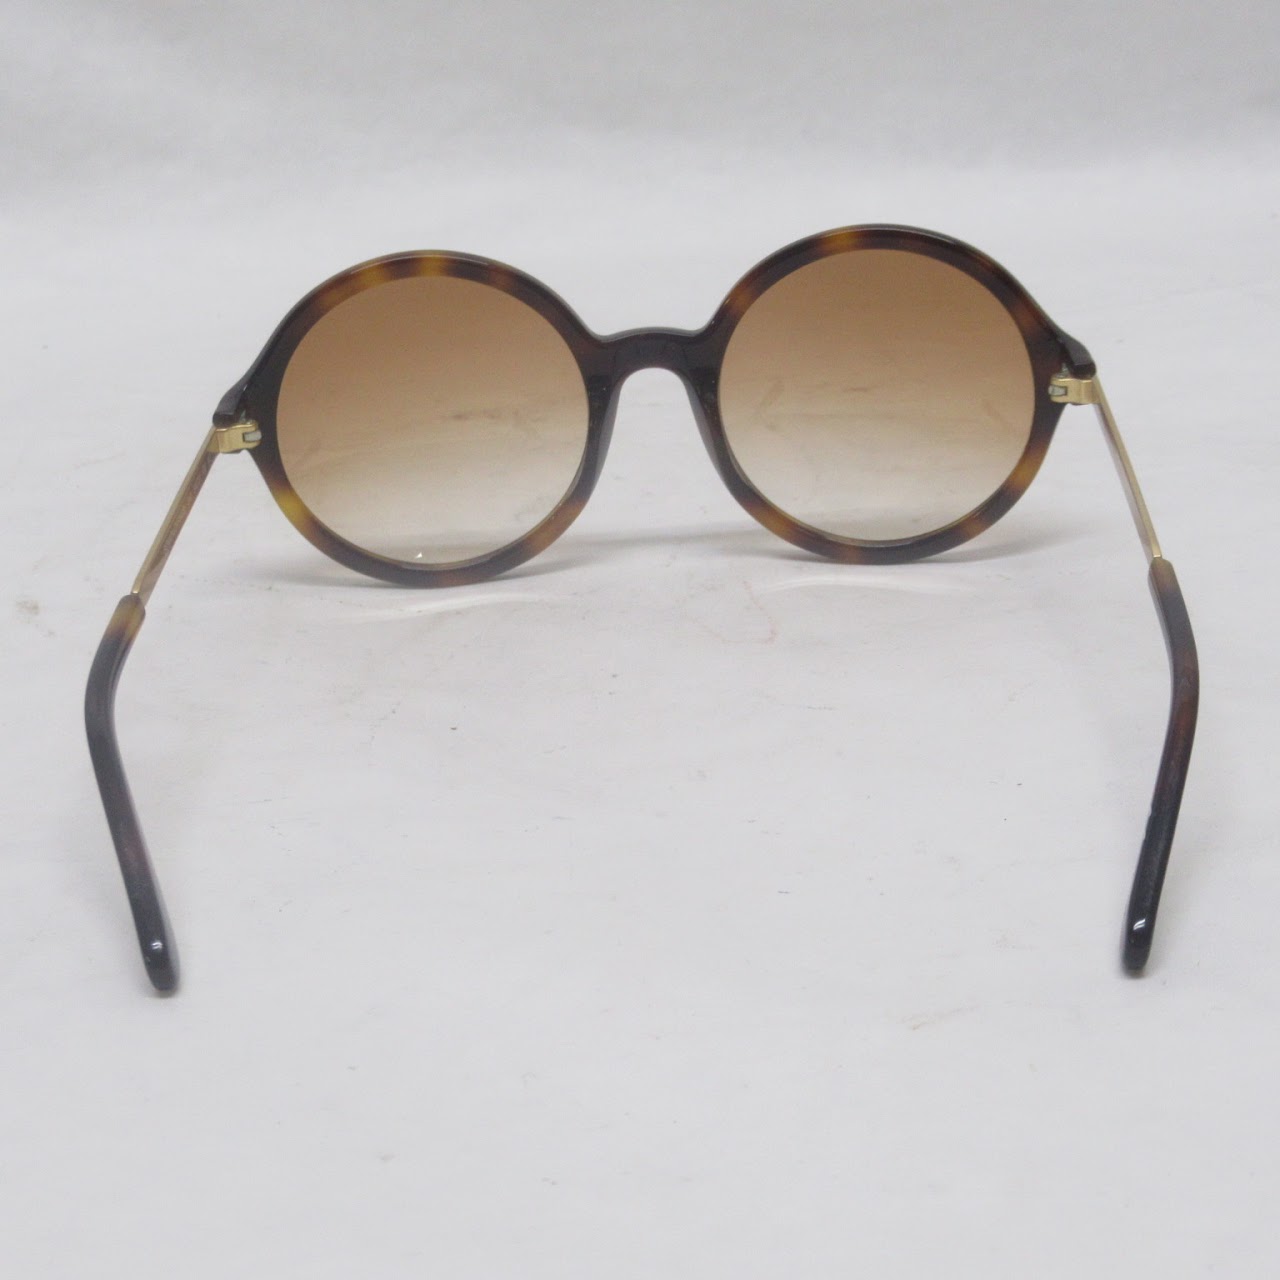 Diane von Furstenberg Sonata Sunglasses